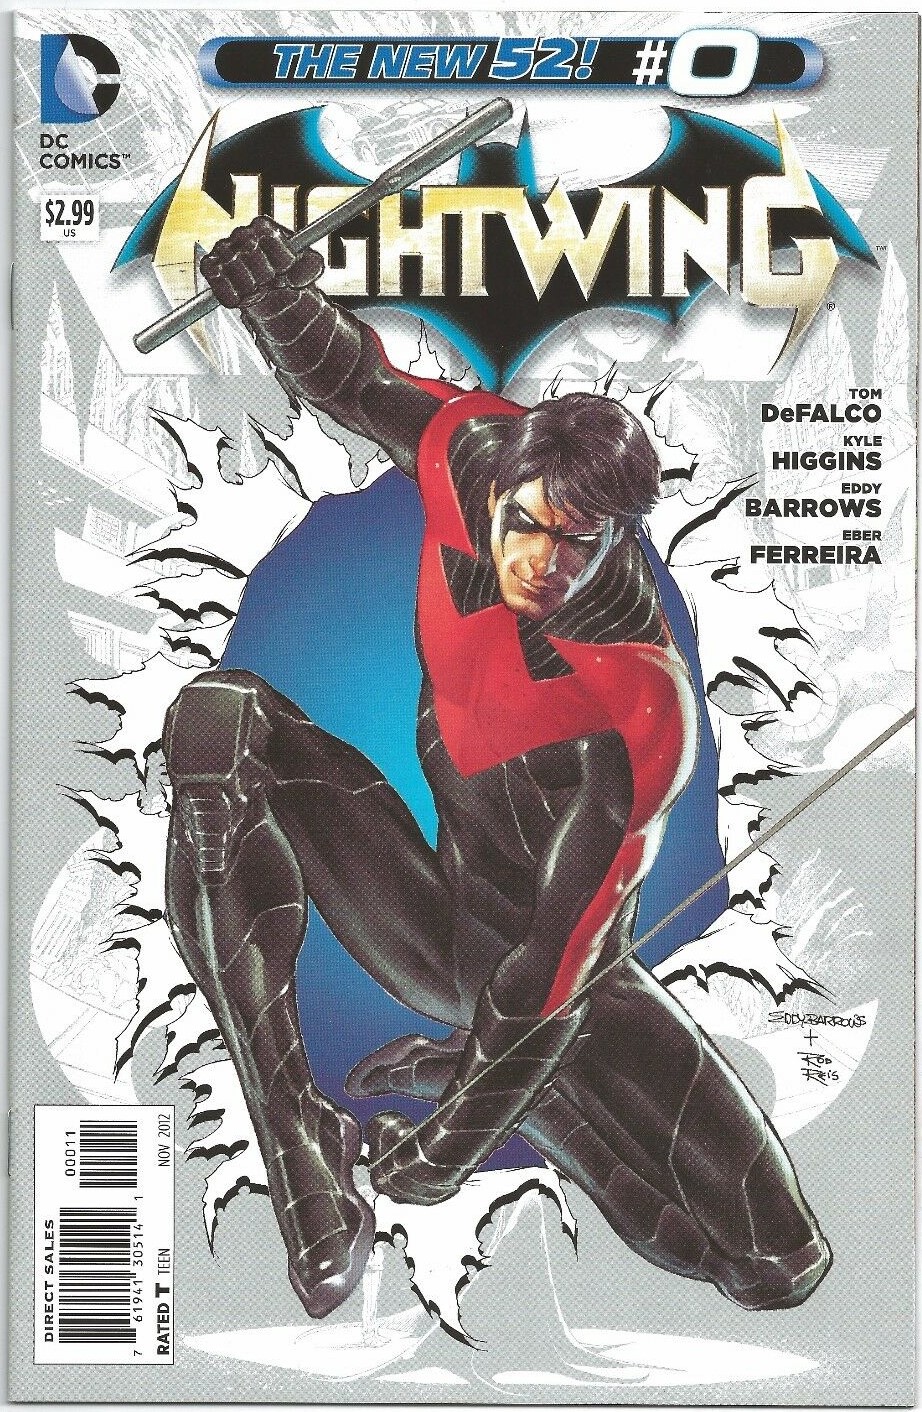 Nightwing #0